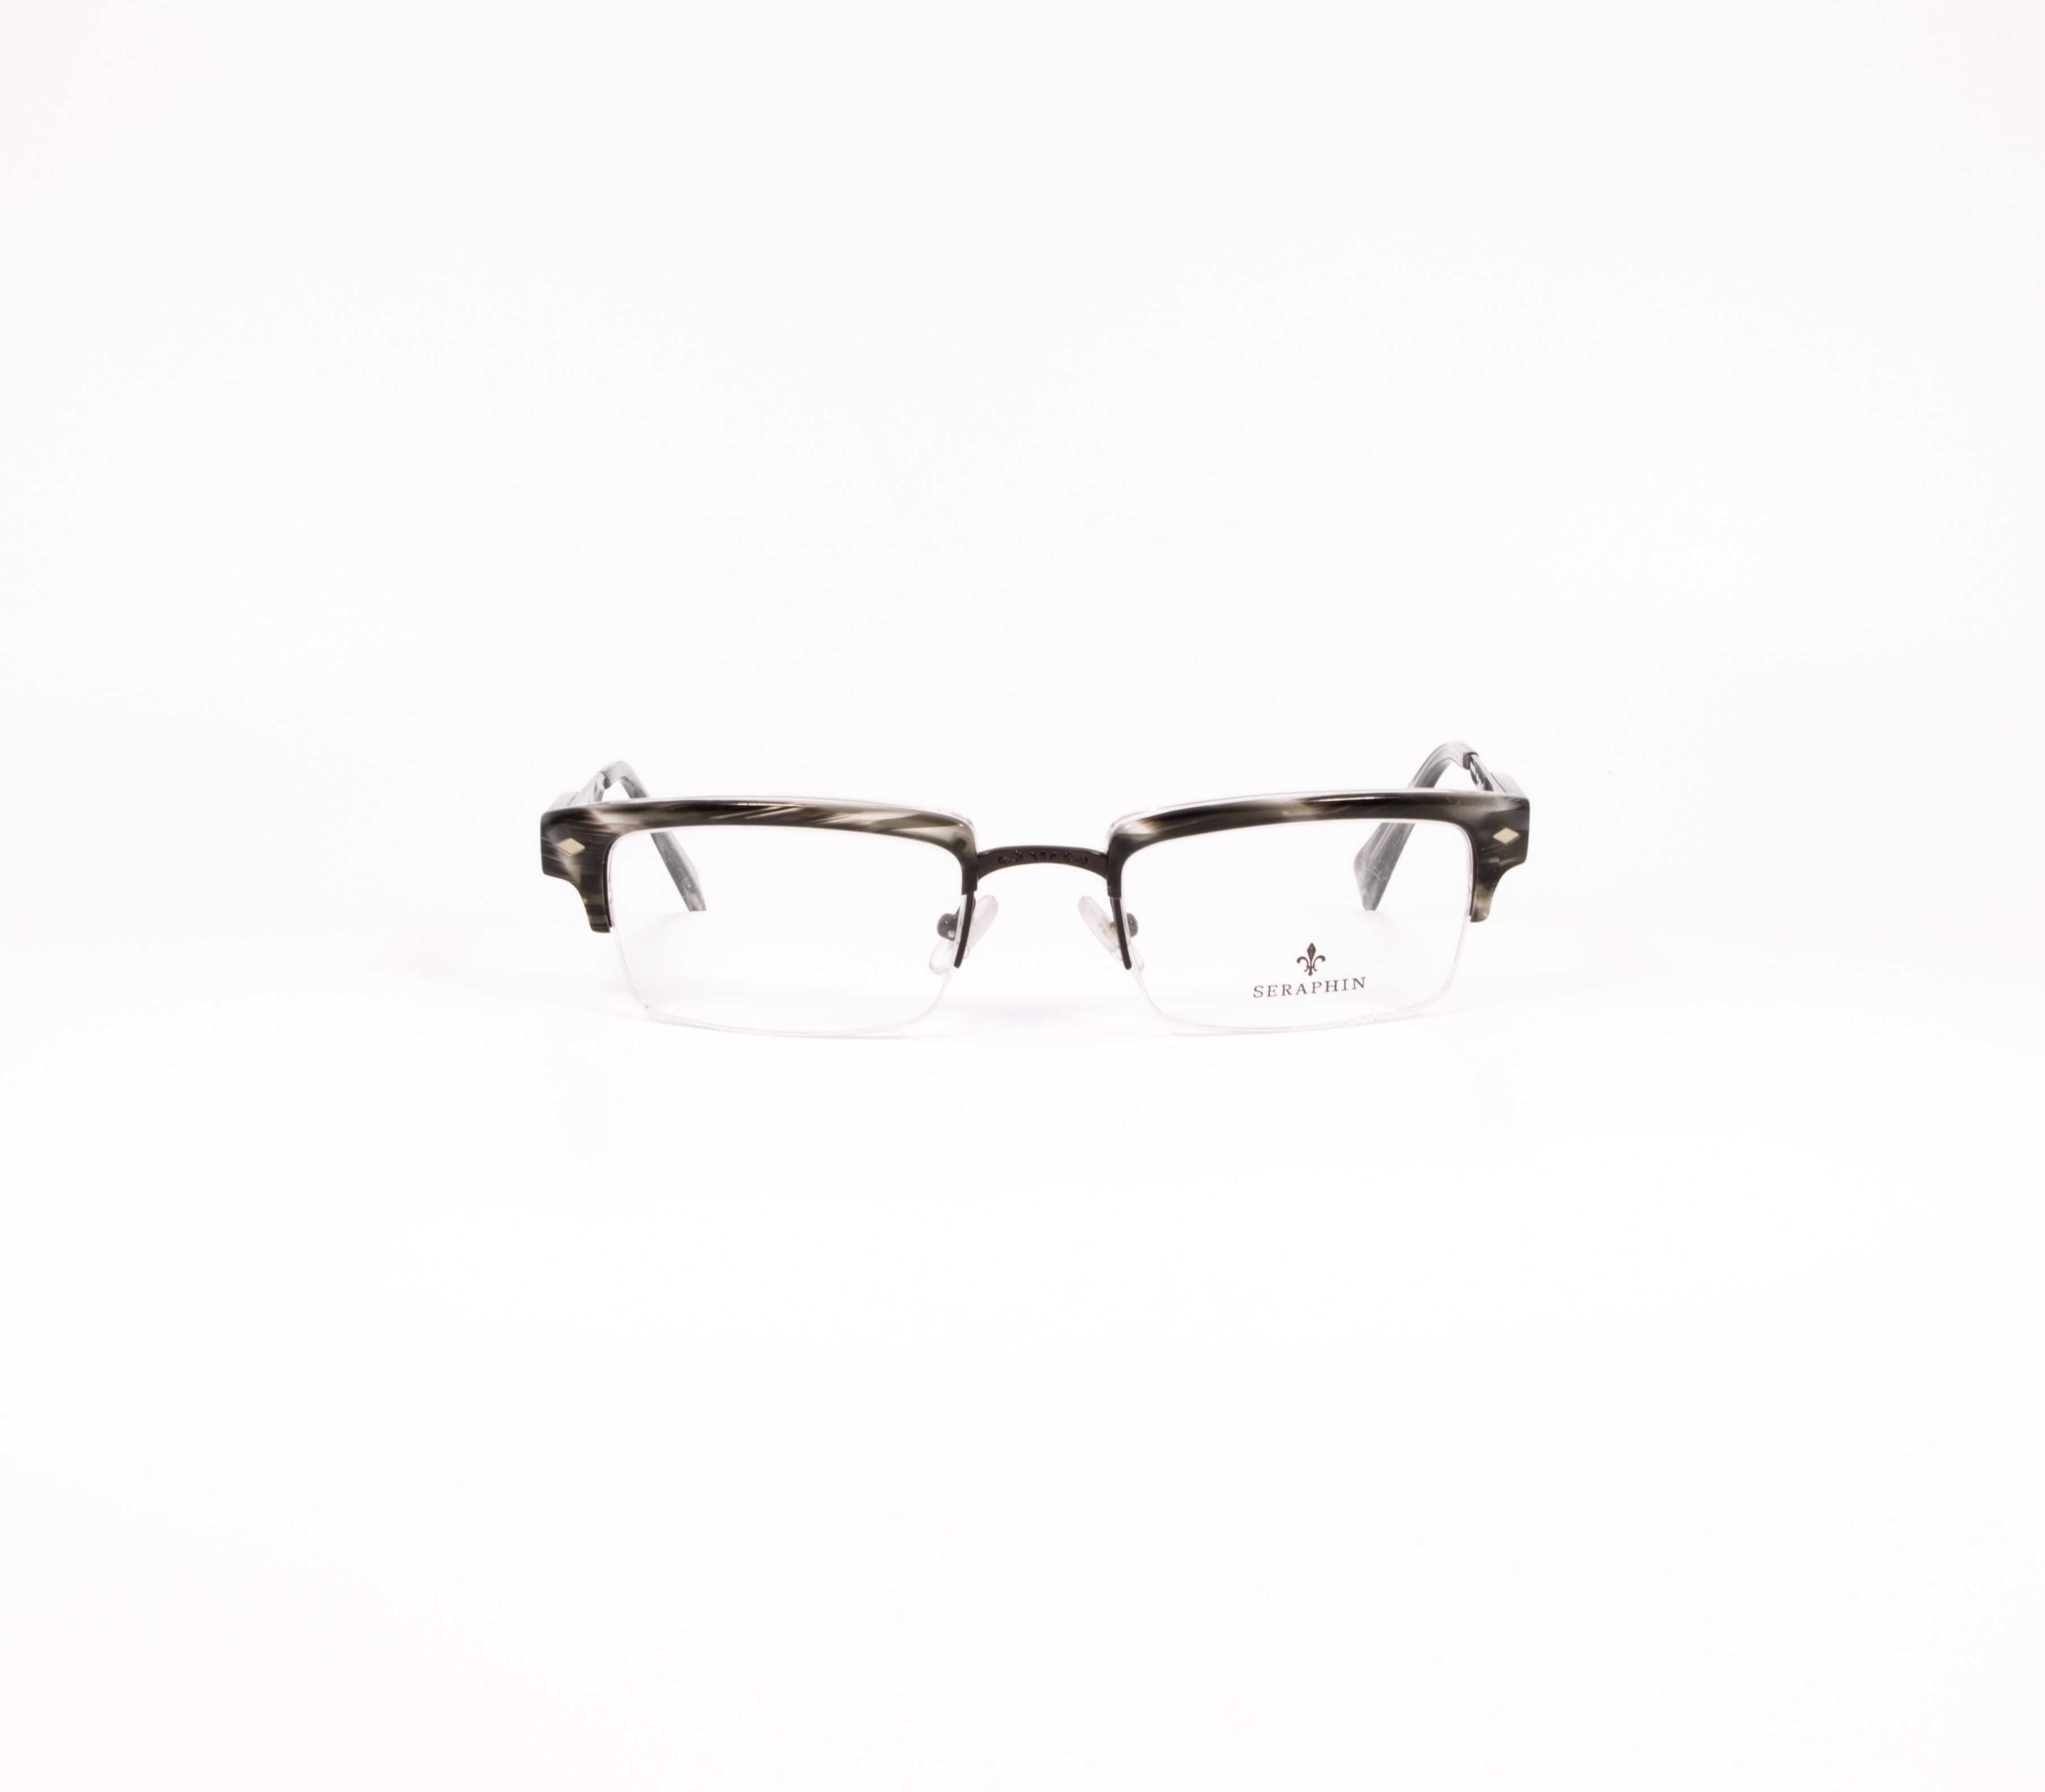 Оправа Seraphin очки окуляри Handmade in Japan Retail 320$